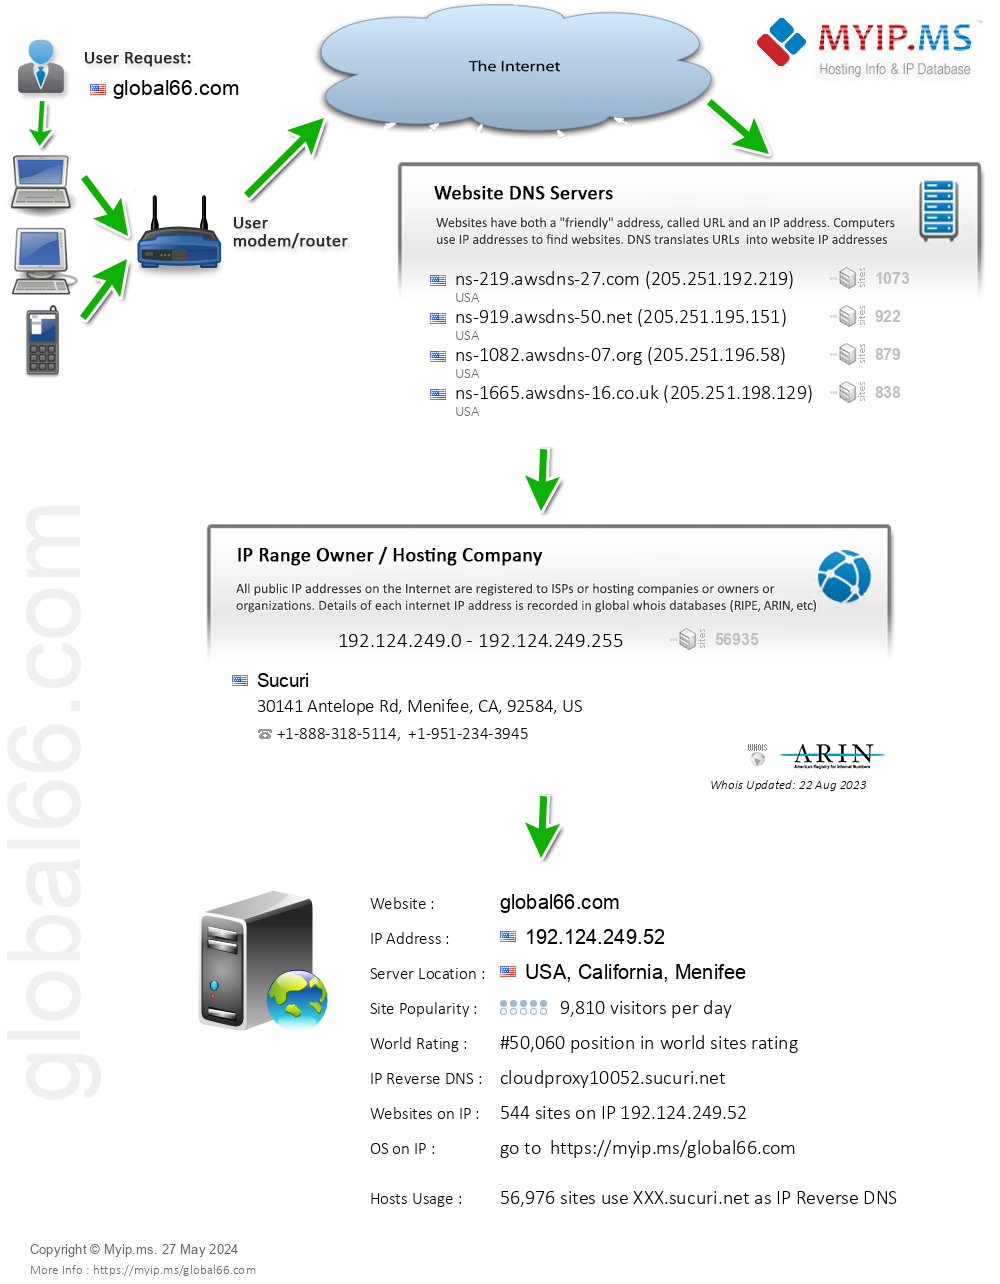 Global66.com - Website Hosting Visual IP Diagram